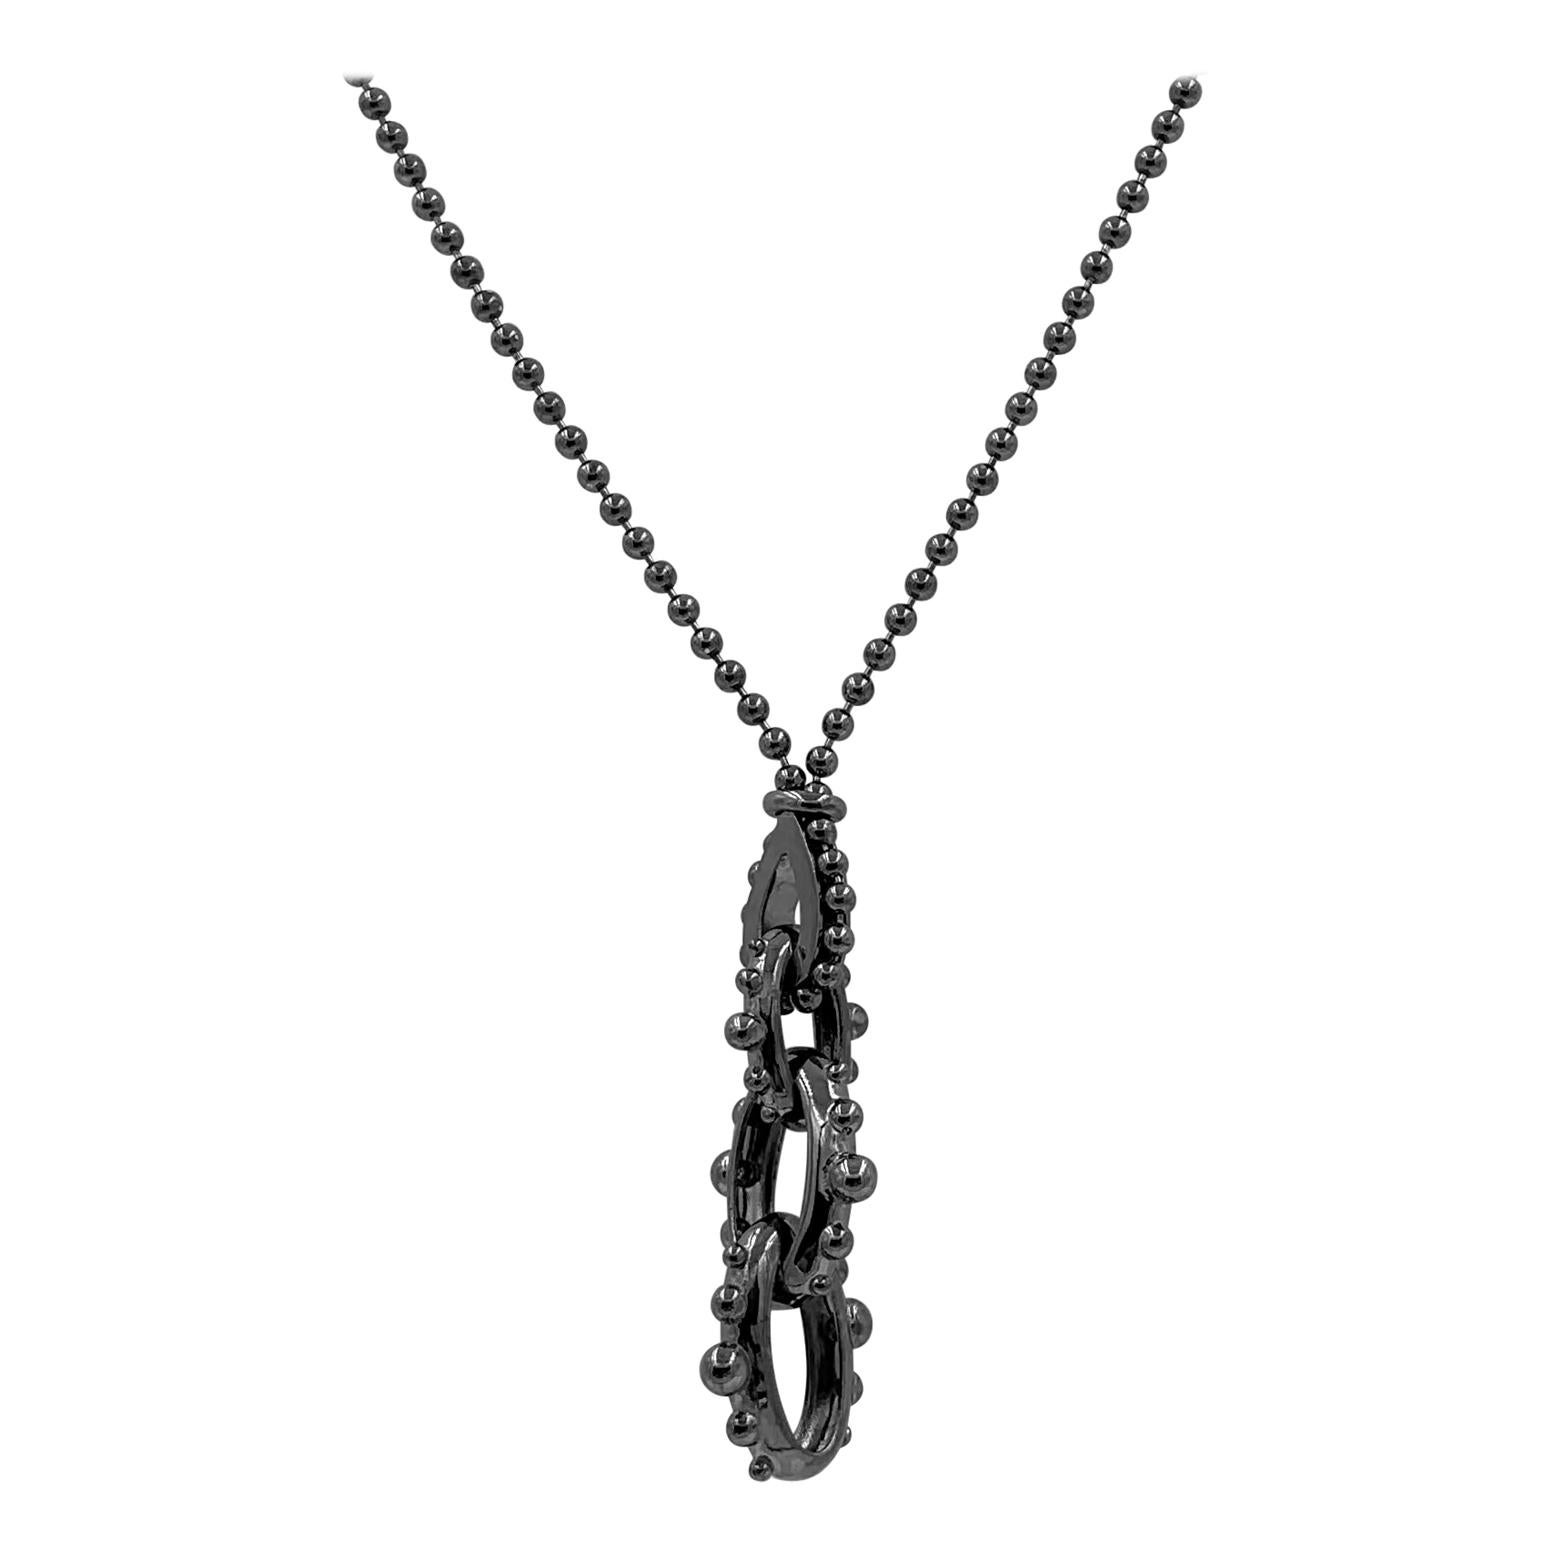 Gothic Revival Chain Necklaces